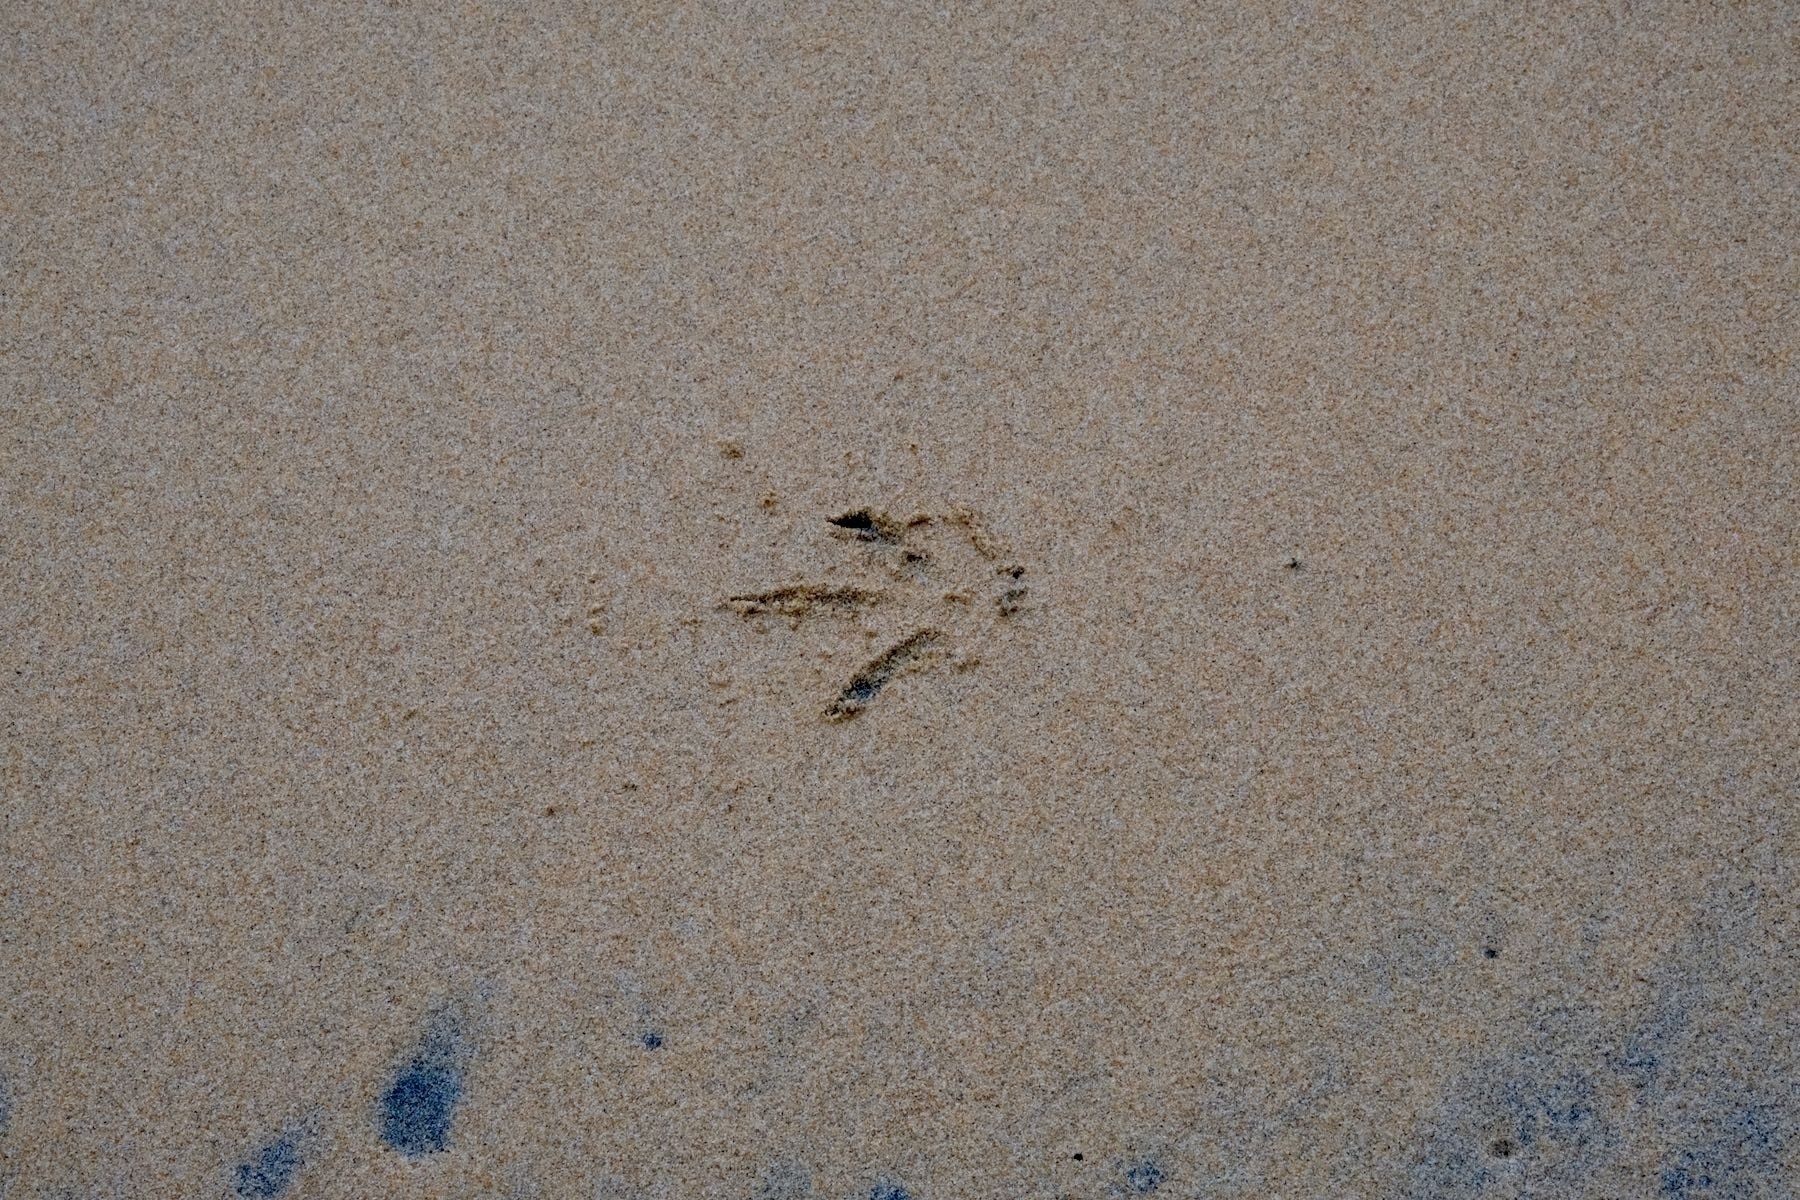 A Kiwi footprint with its distinctive three-toed shape. 